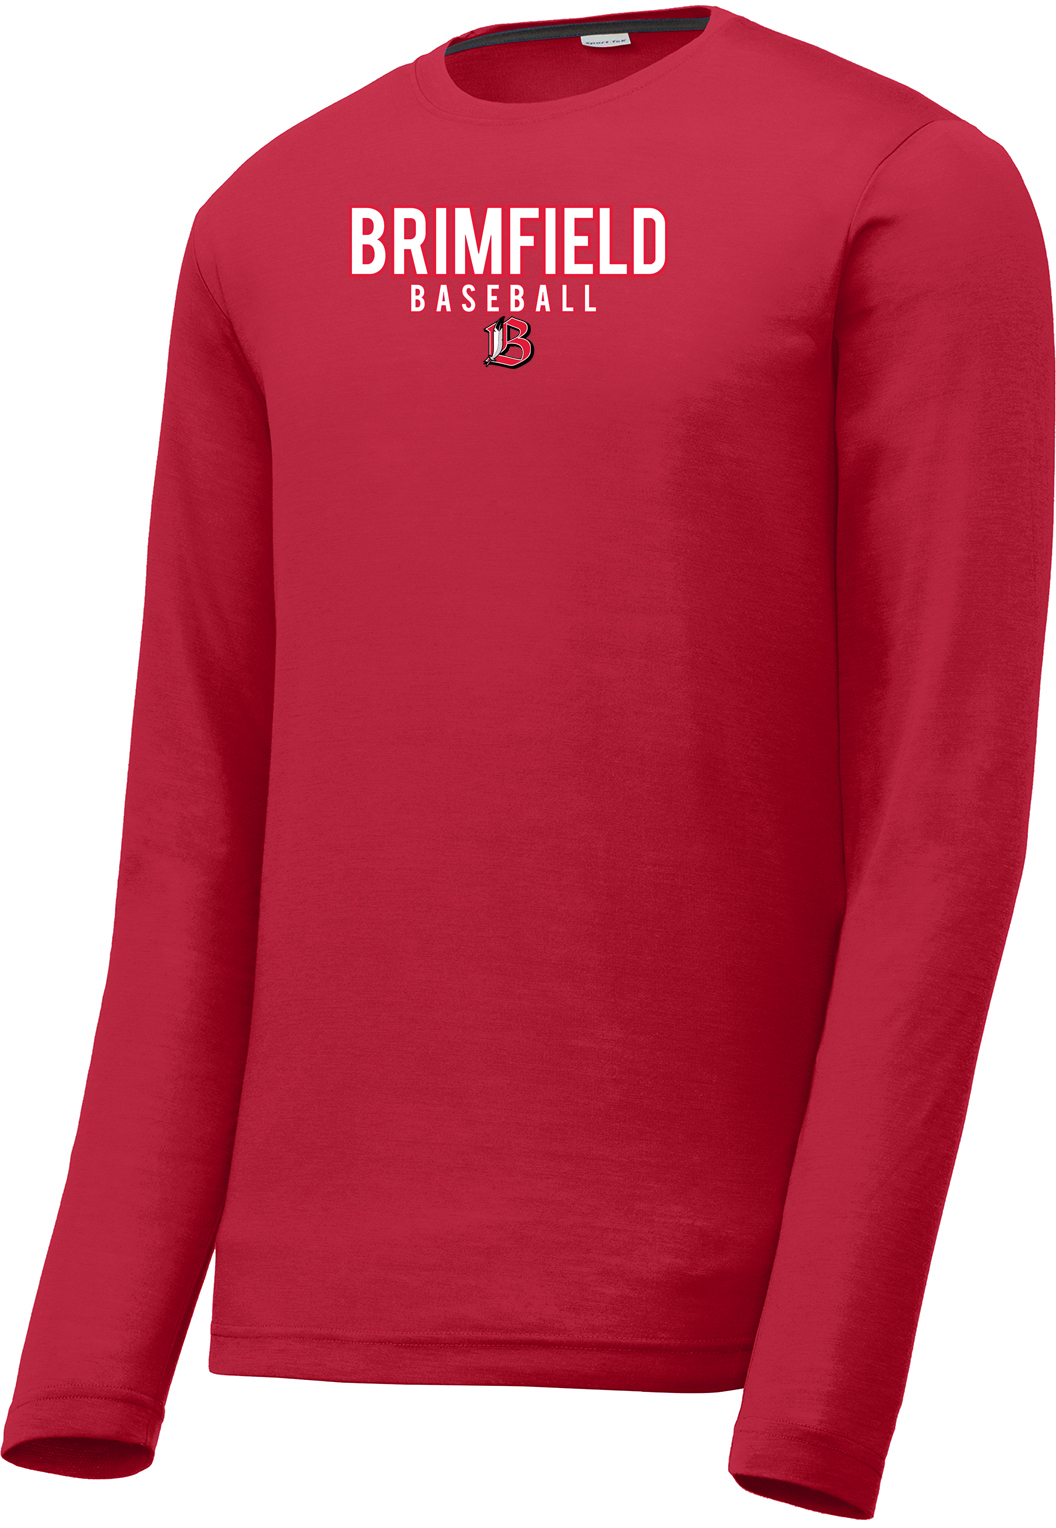 Brimfield Baseball Long Sleeve CottonTouch Performance Shirt